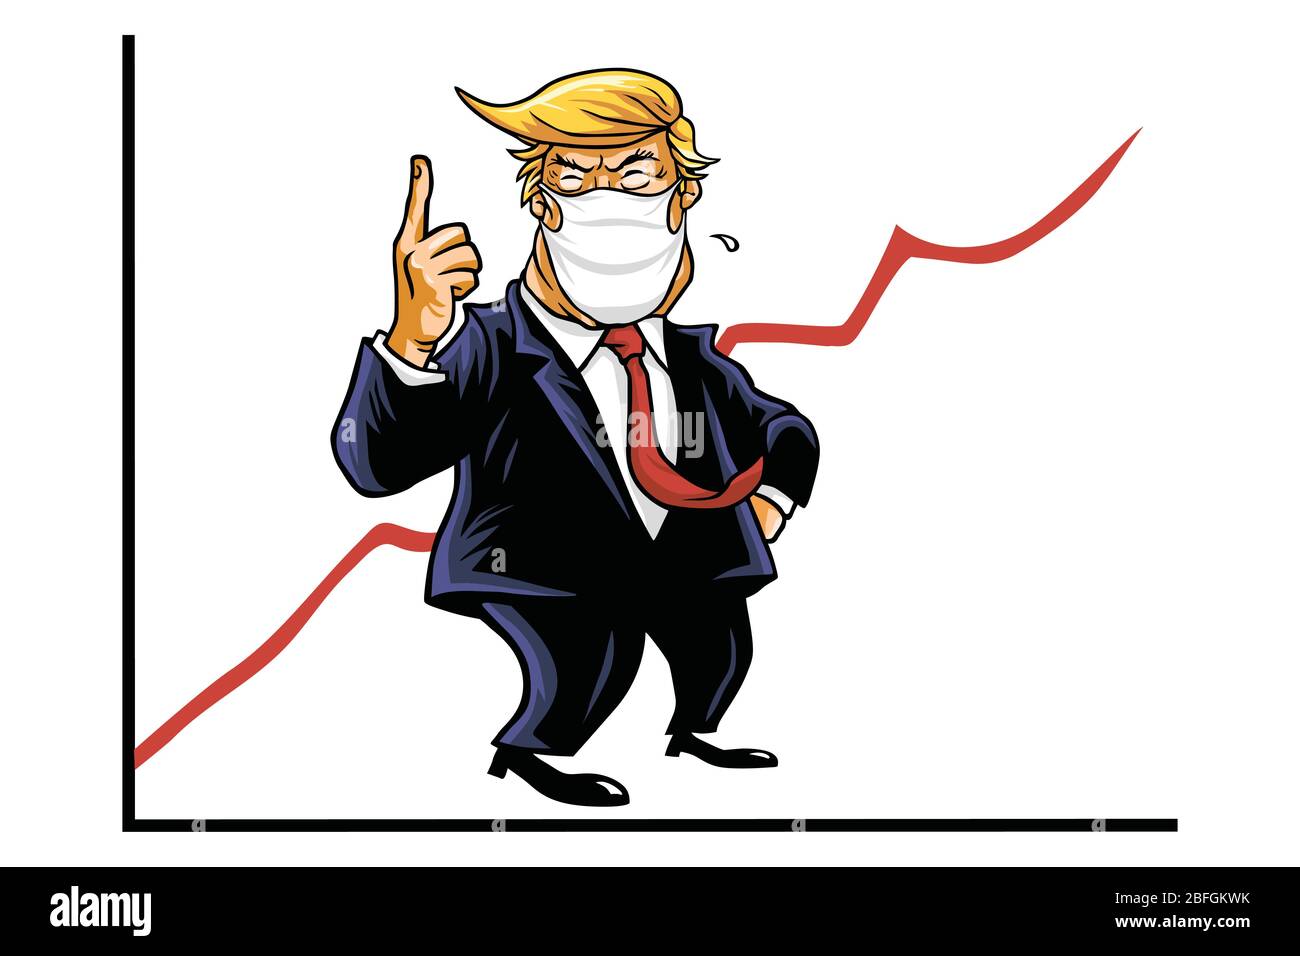 Donald Trump Presidential Approval Ratings Amid Corona Virus Coronavirus Covid-19 Krise. Trump Kampagne Cartoon Vektor Editorial Illustration Stock Vektor